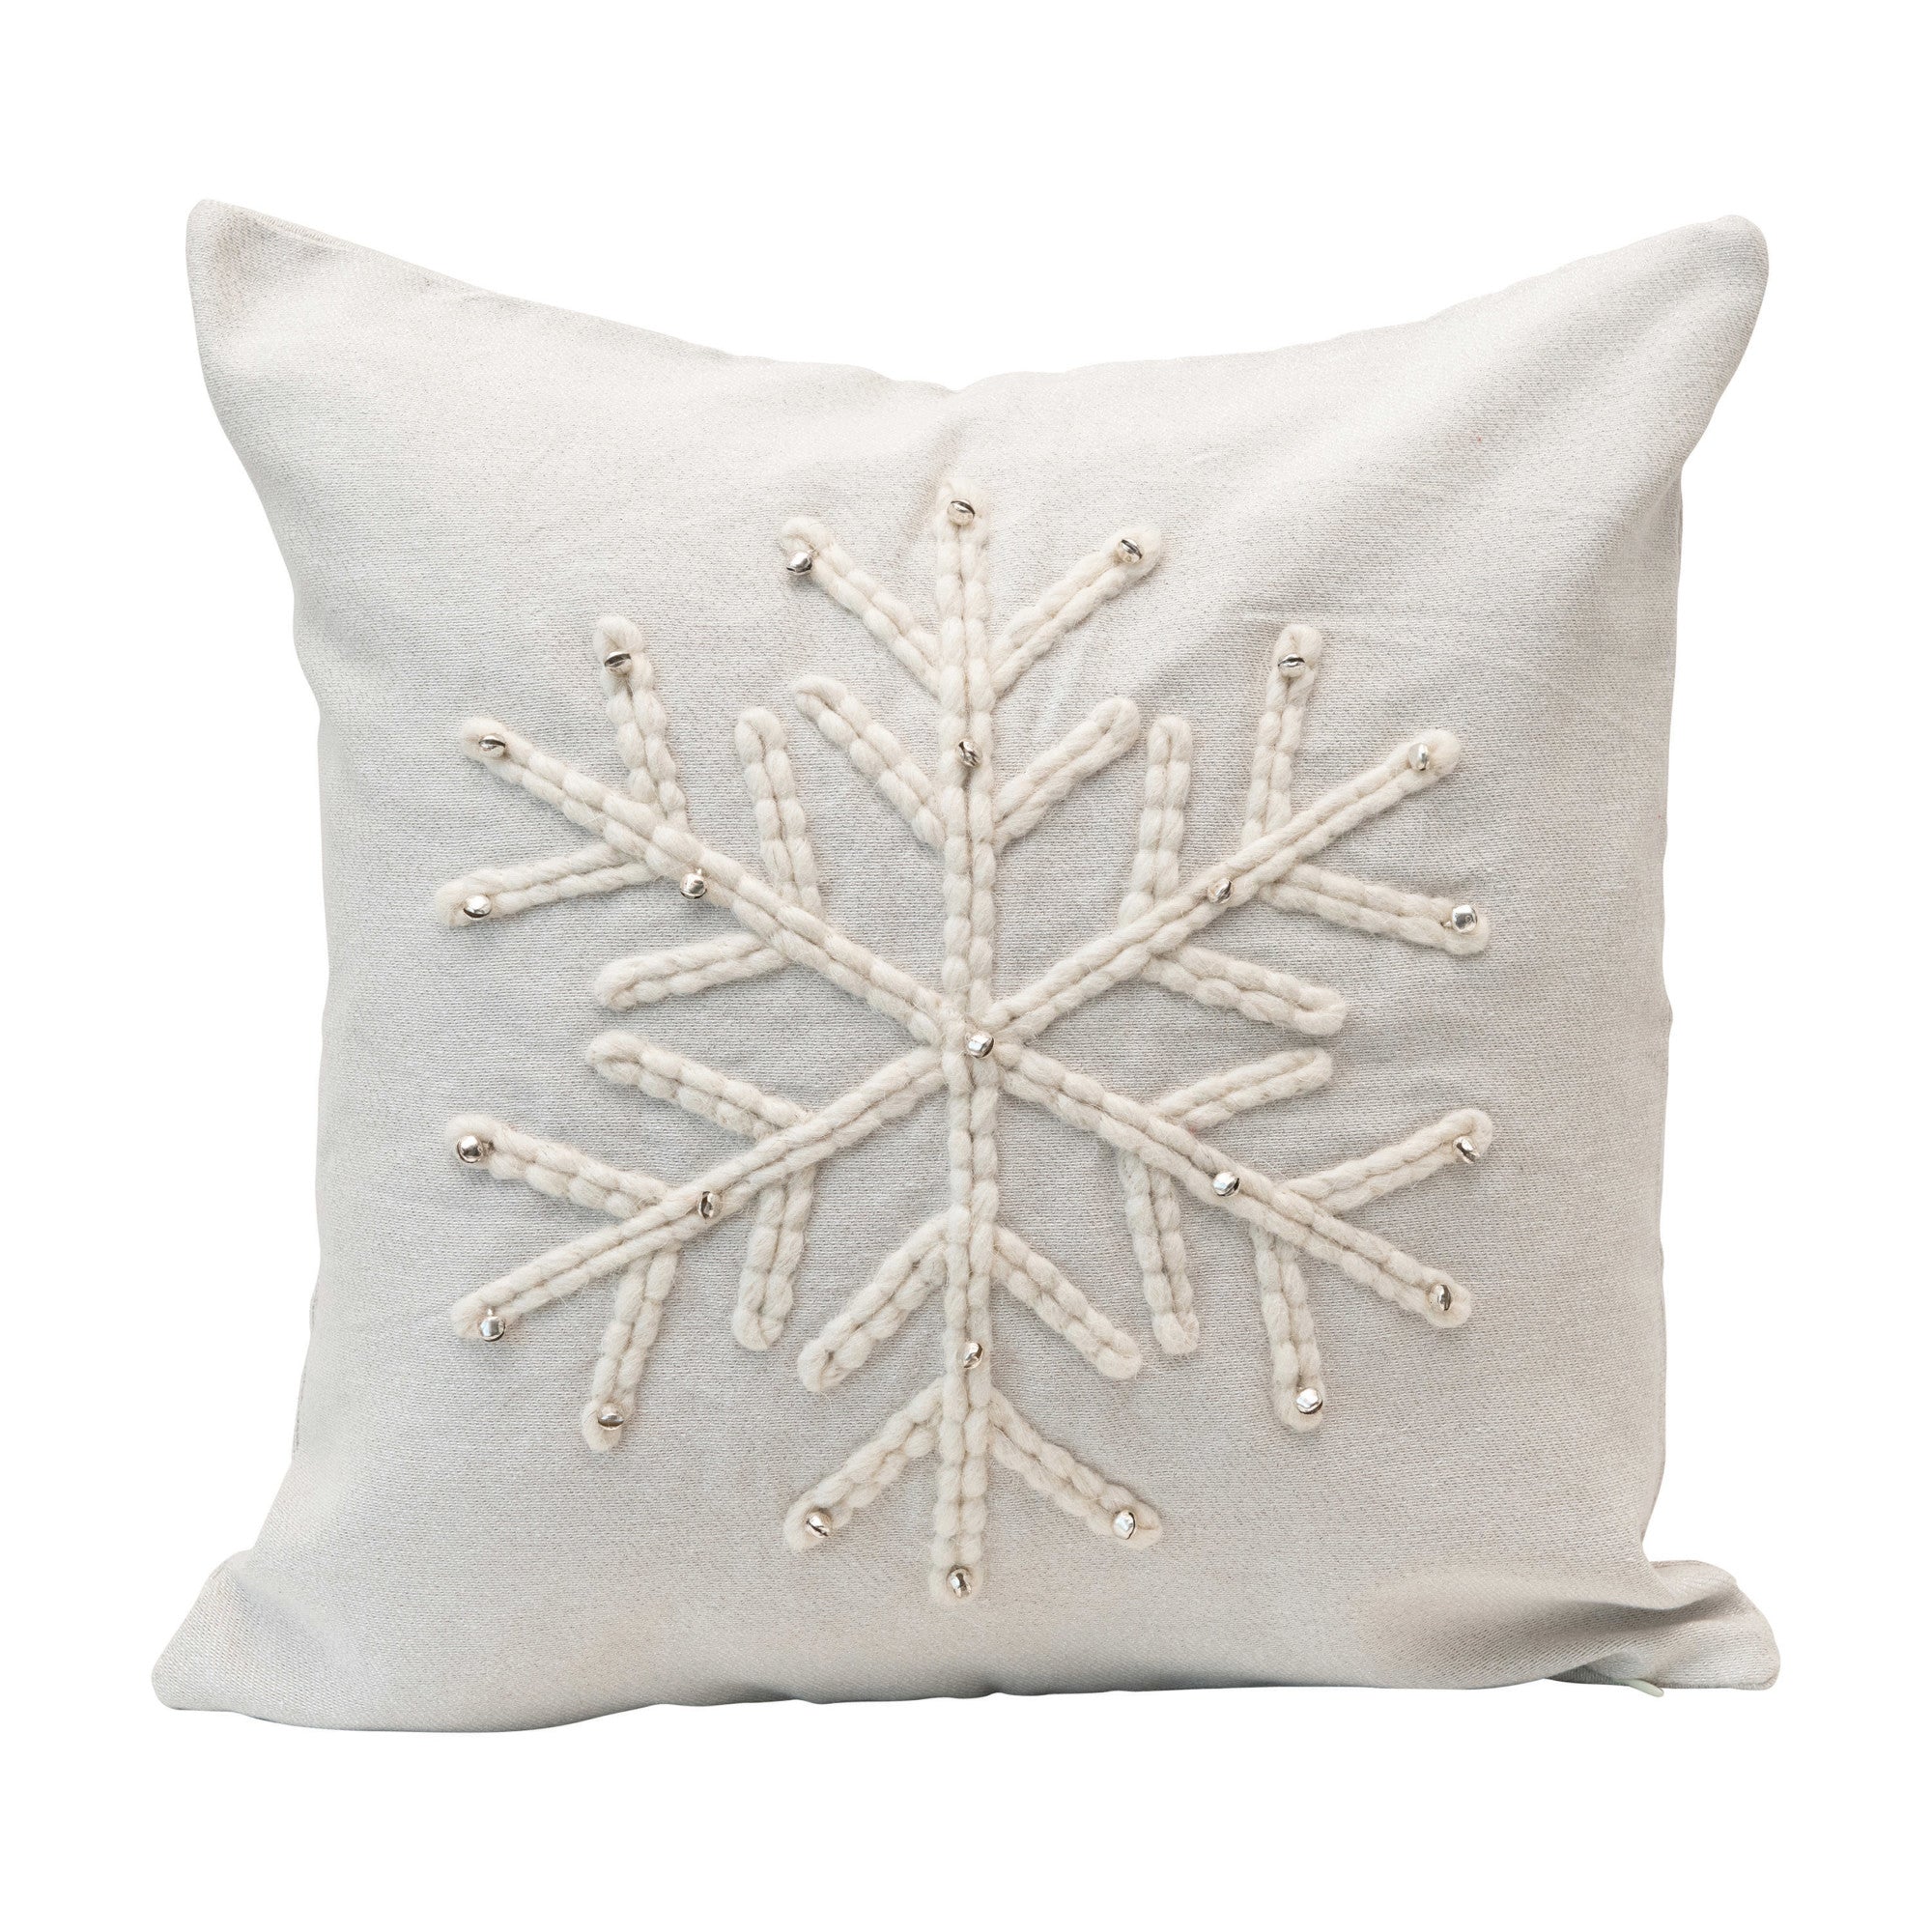 Snowflake Holiday Pillow